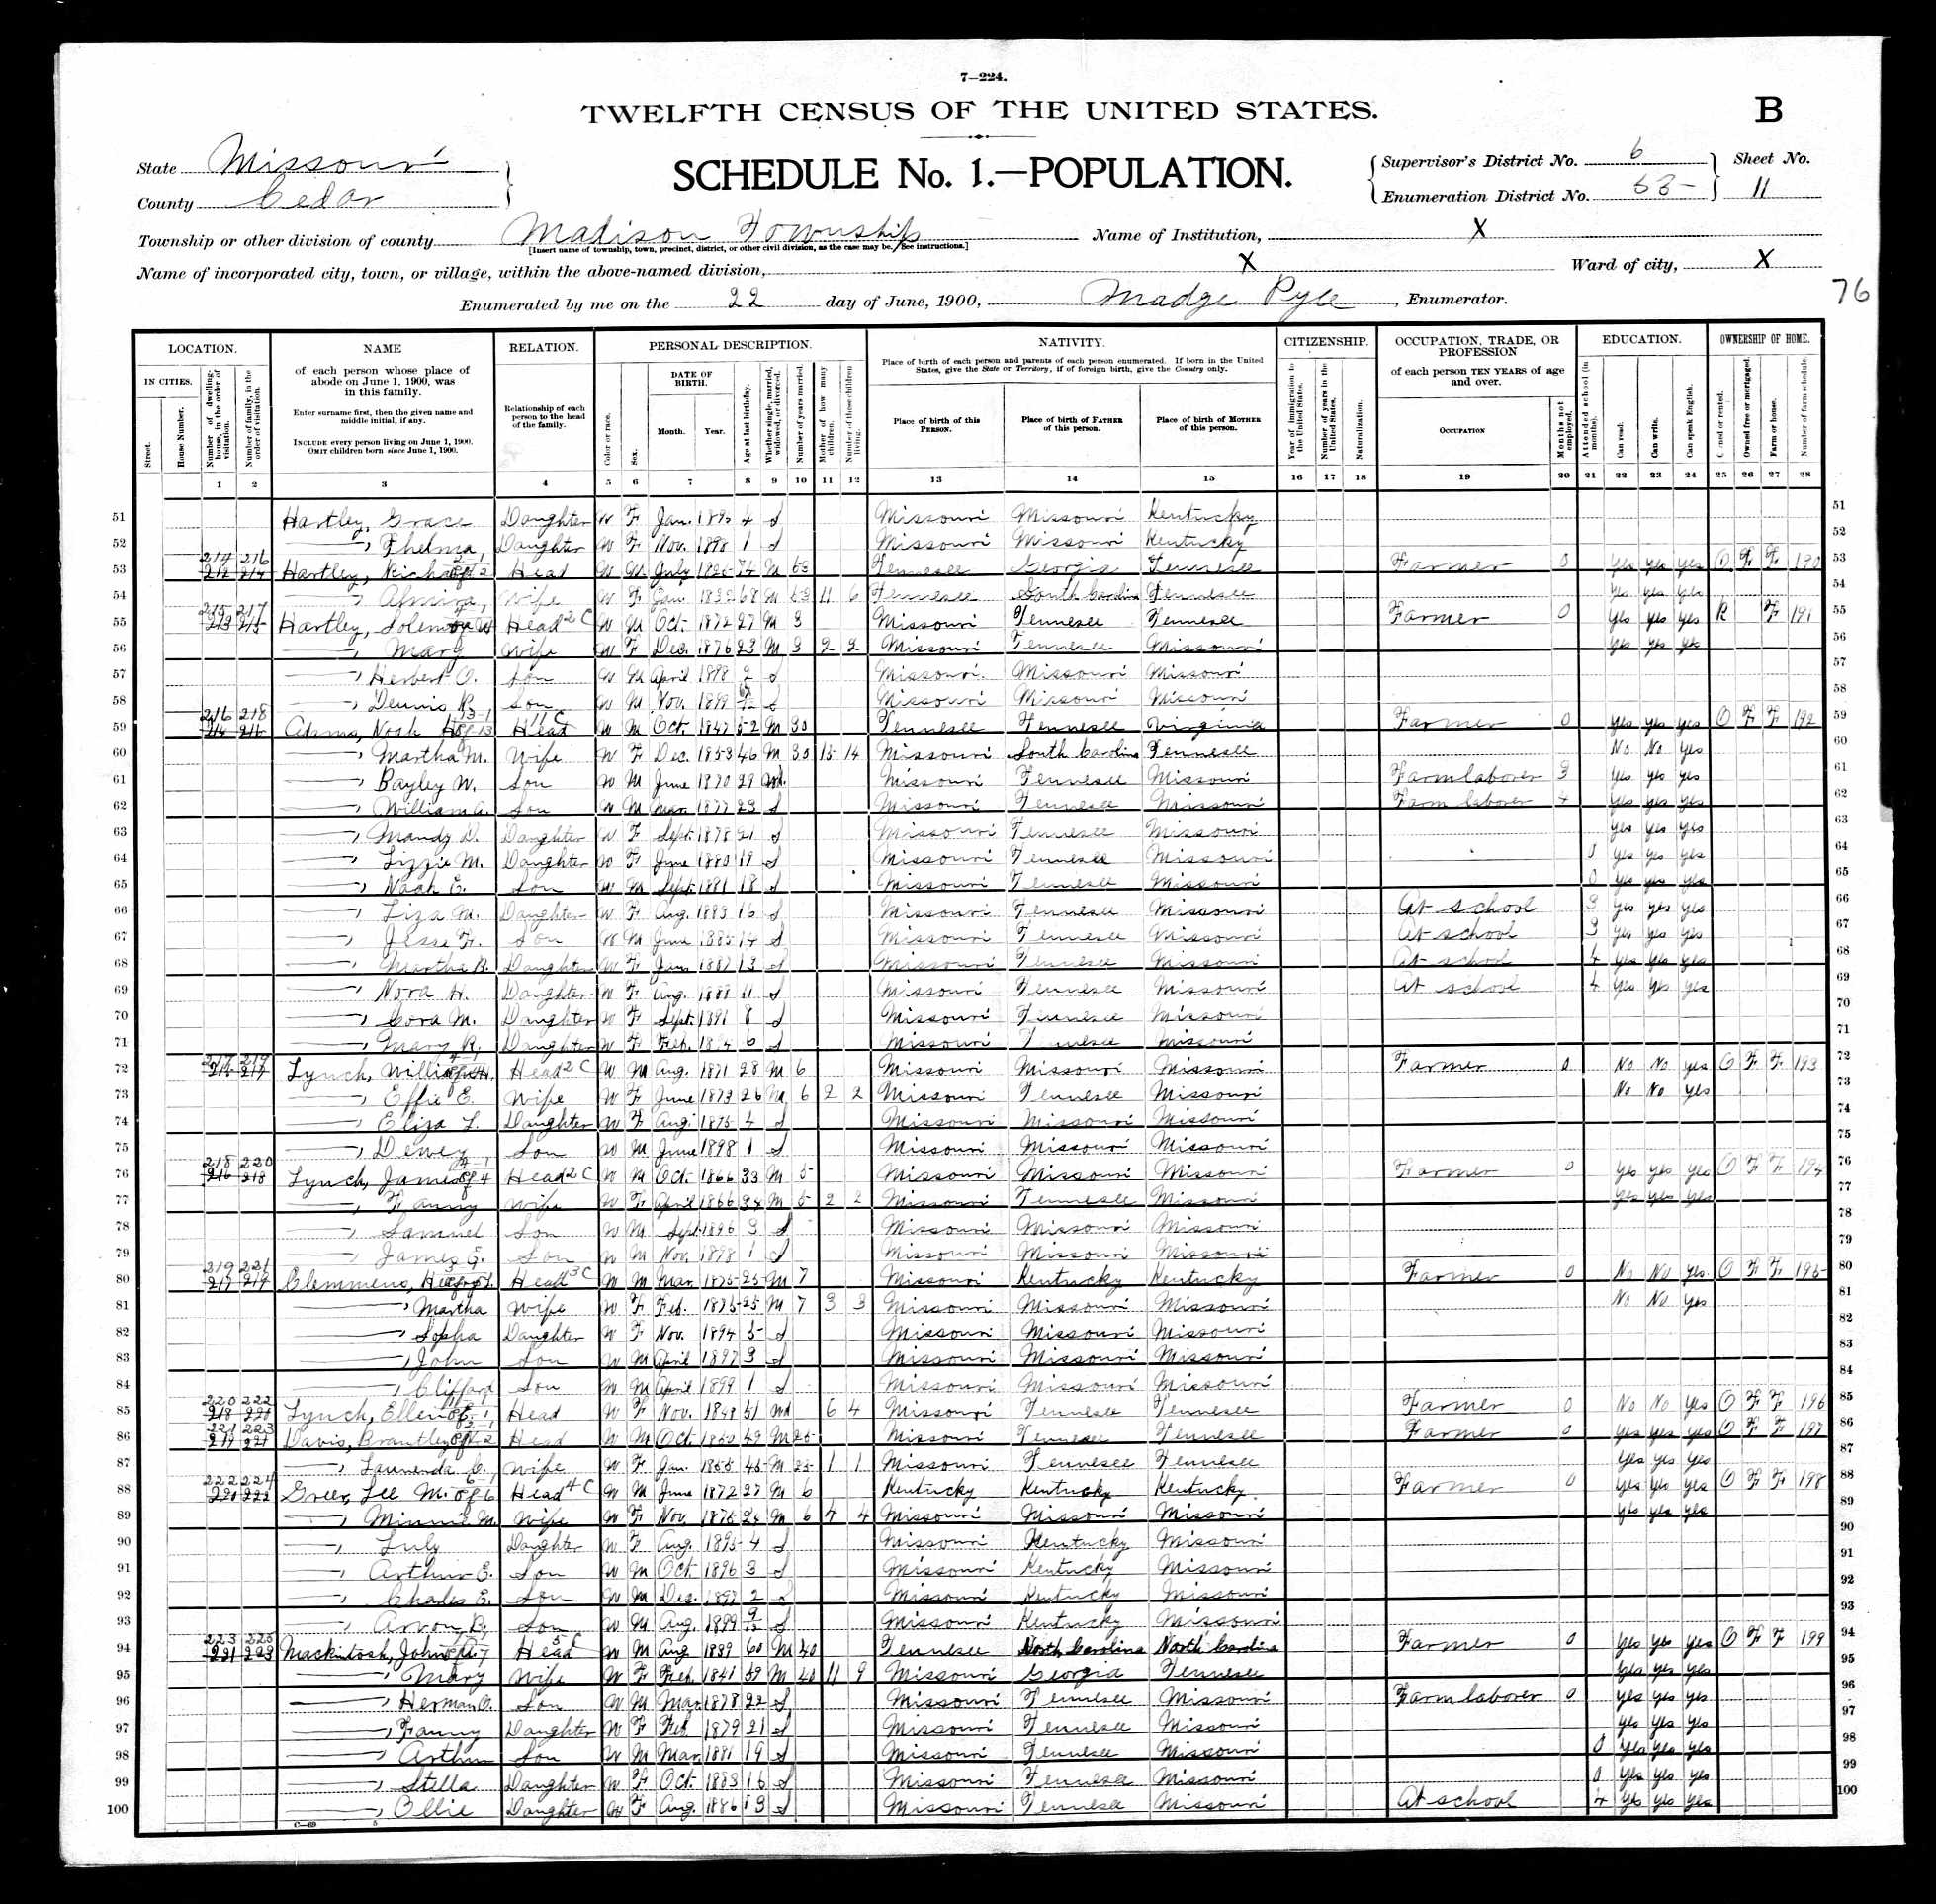 Richard D. Hartley, 1900 Cedar County, Missouri, census